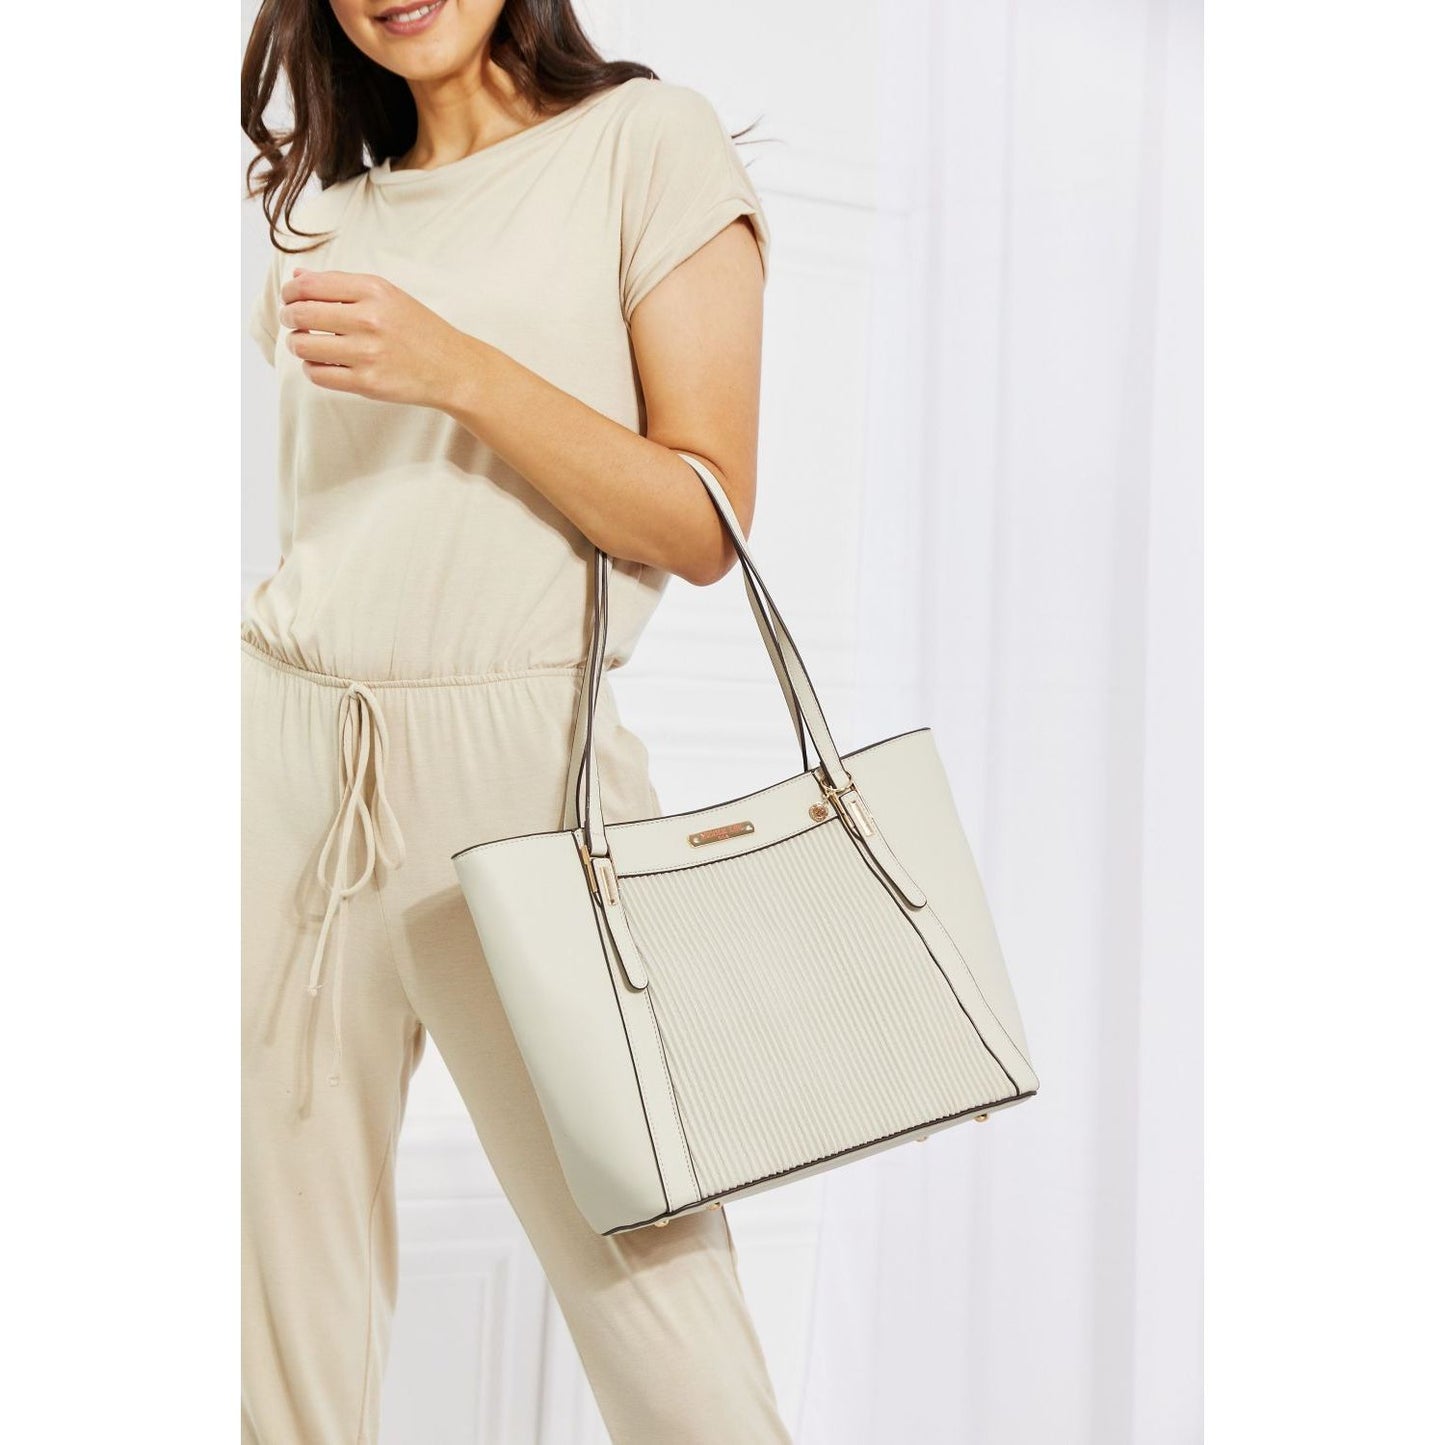 Nicole Lee USA Feeling Right Handbag Set - TiffanyzKlozet